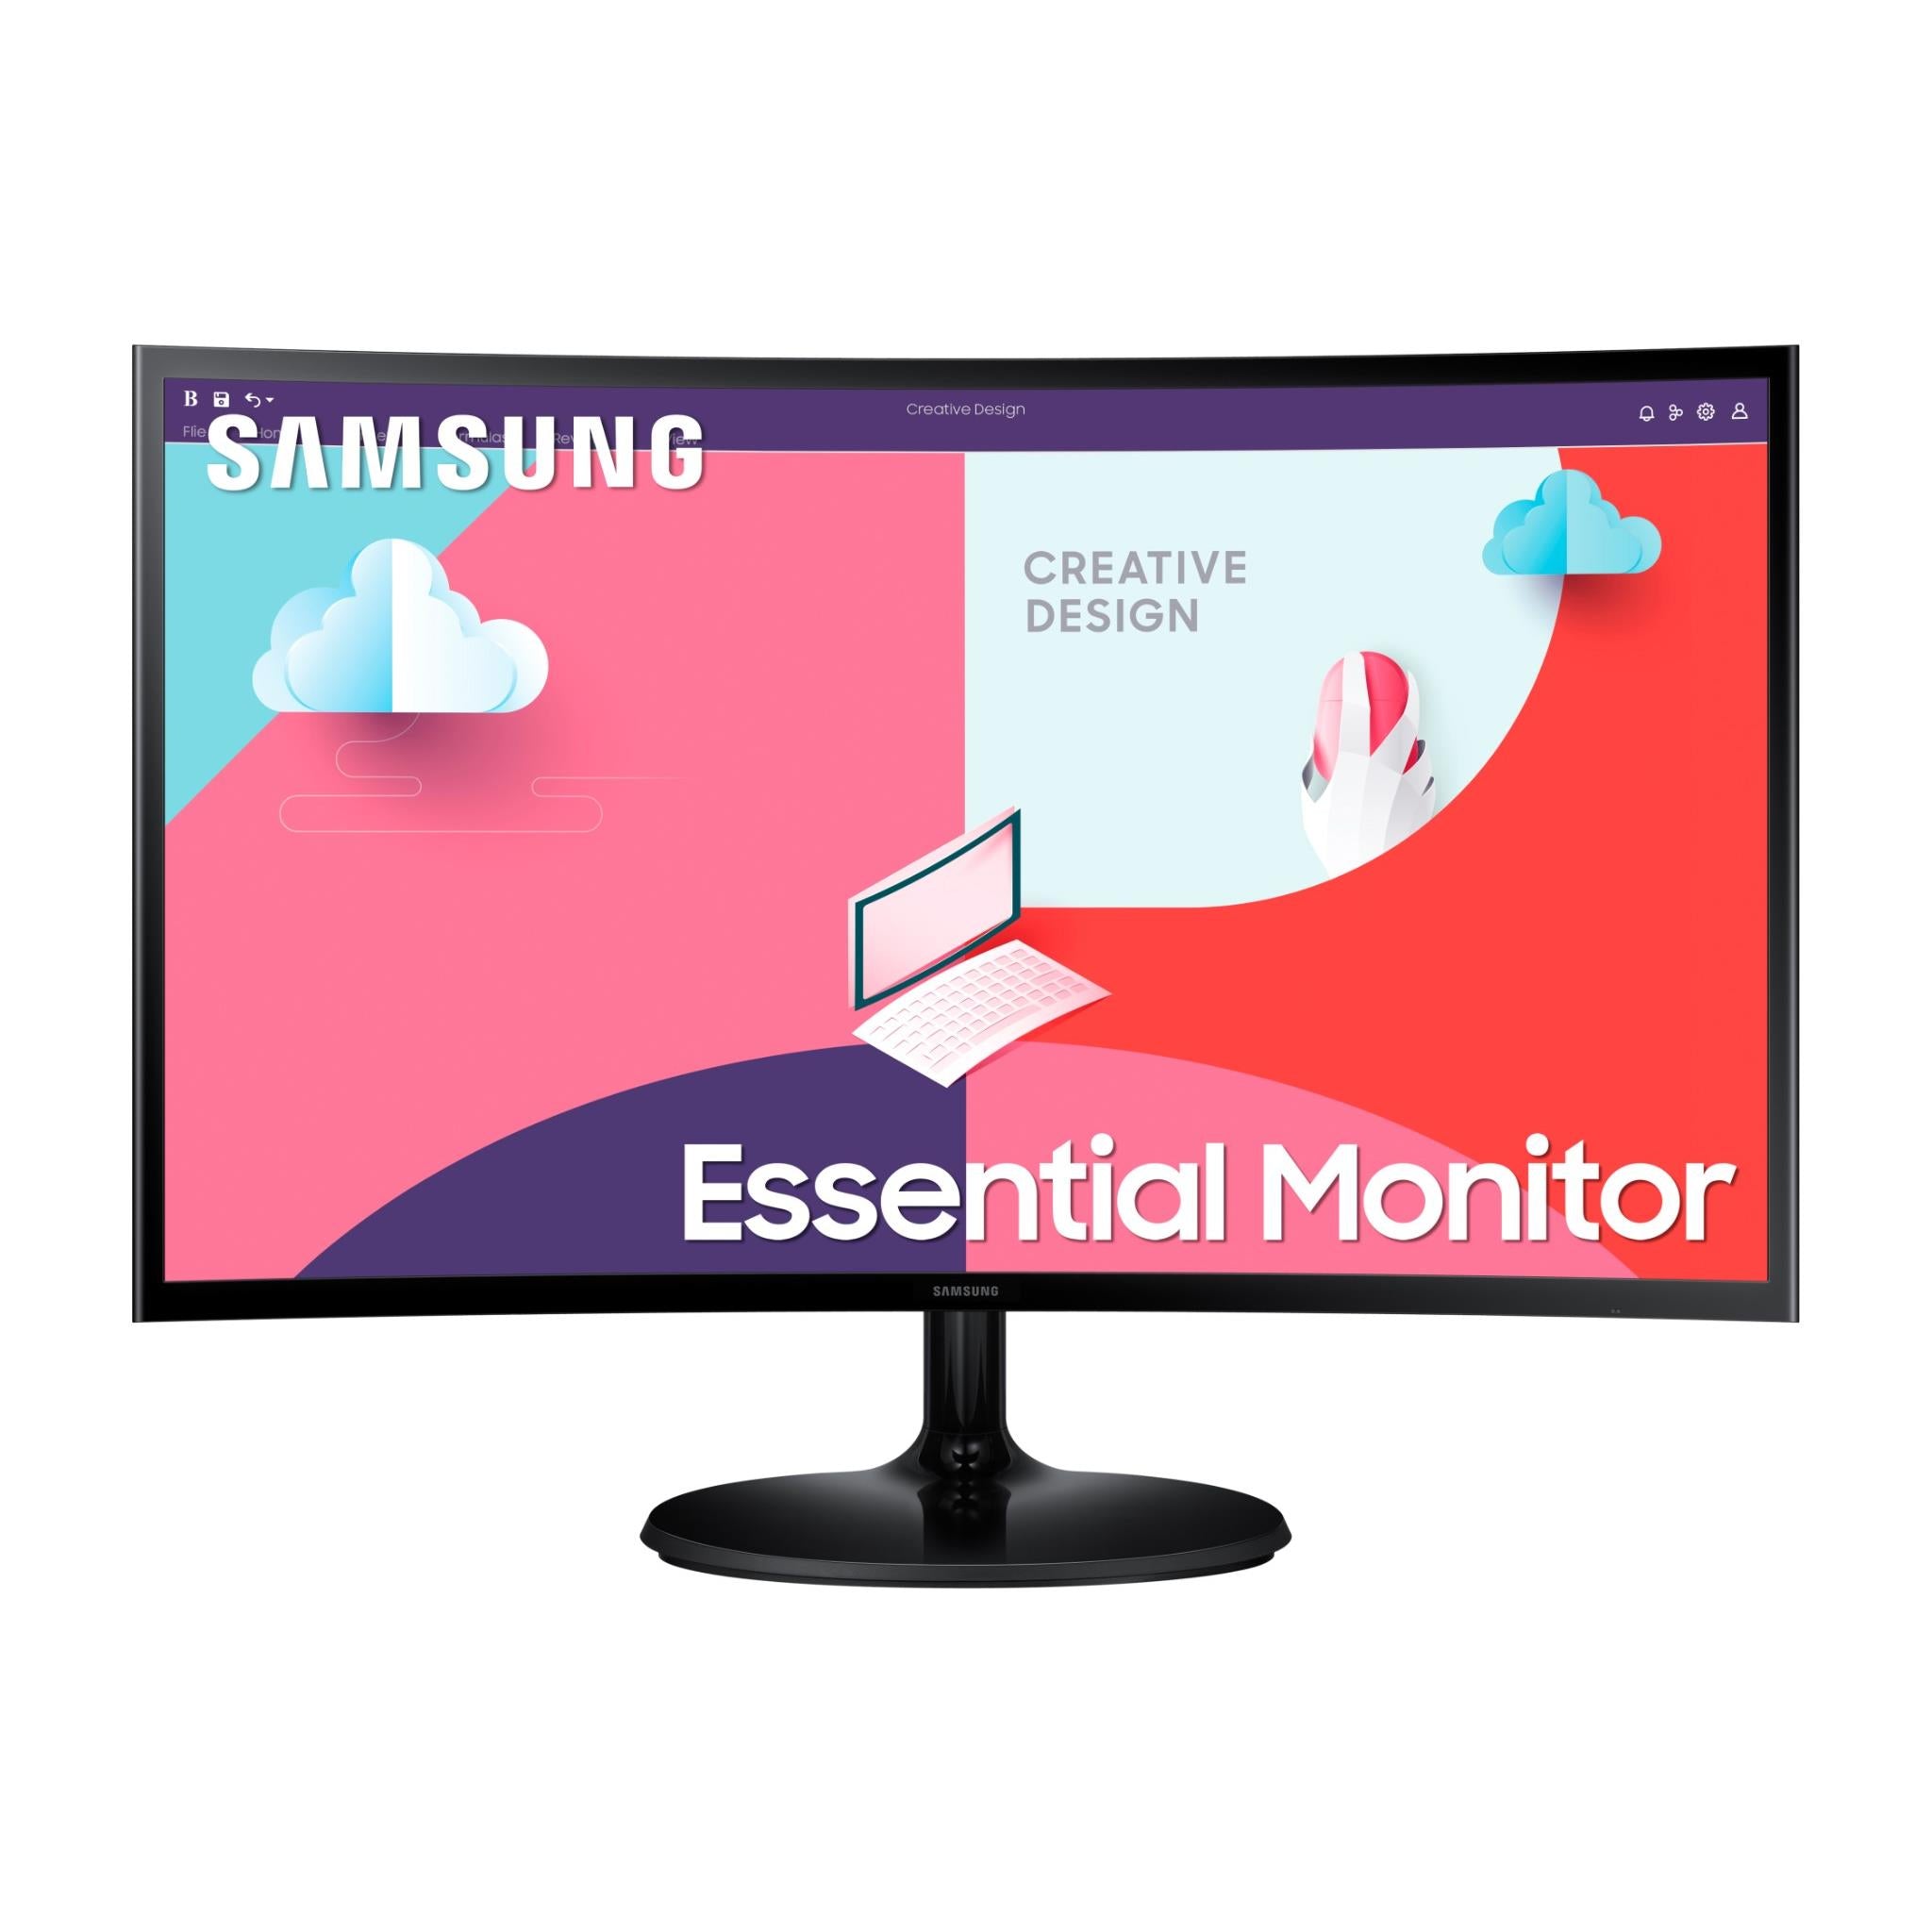 Samsung 27 LED Full HD Monitor with Borderless Design - Sam's Club